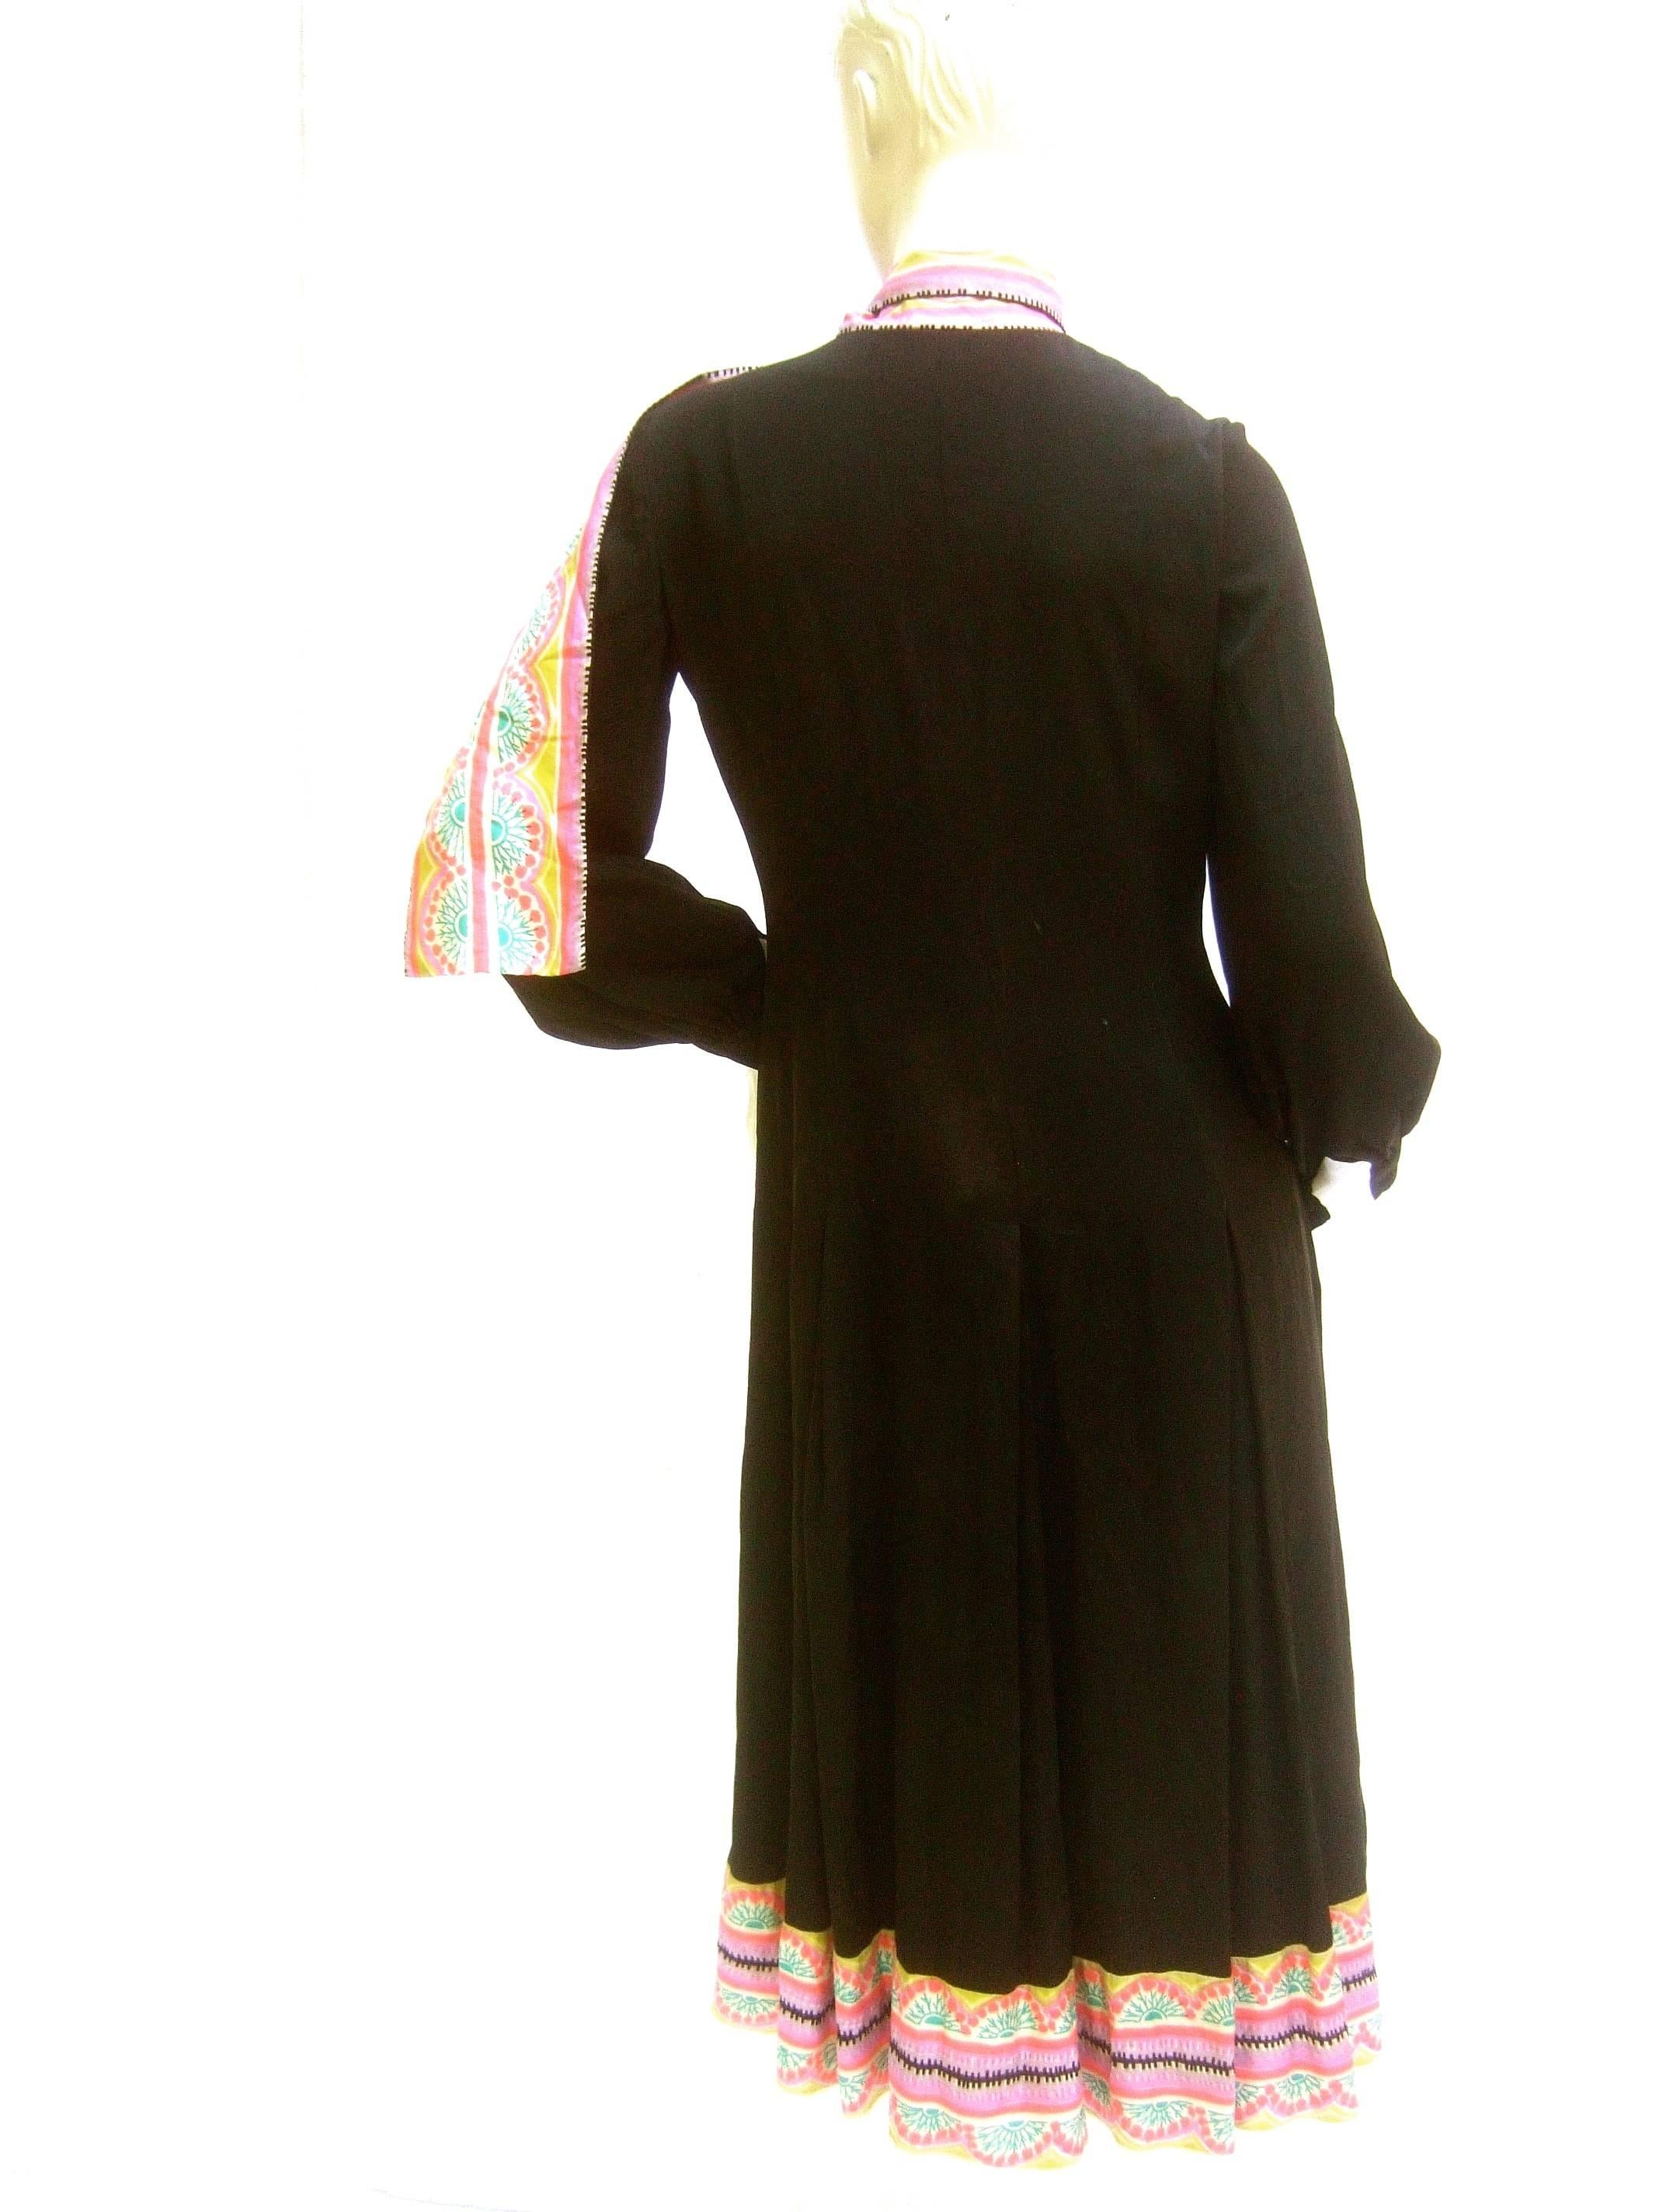 Chester Weinberg Innovative Black Silk Pastel Trim Dress c 1970 For Sale 4